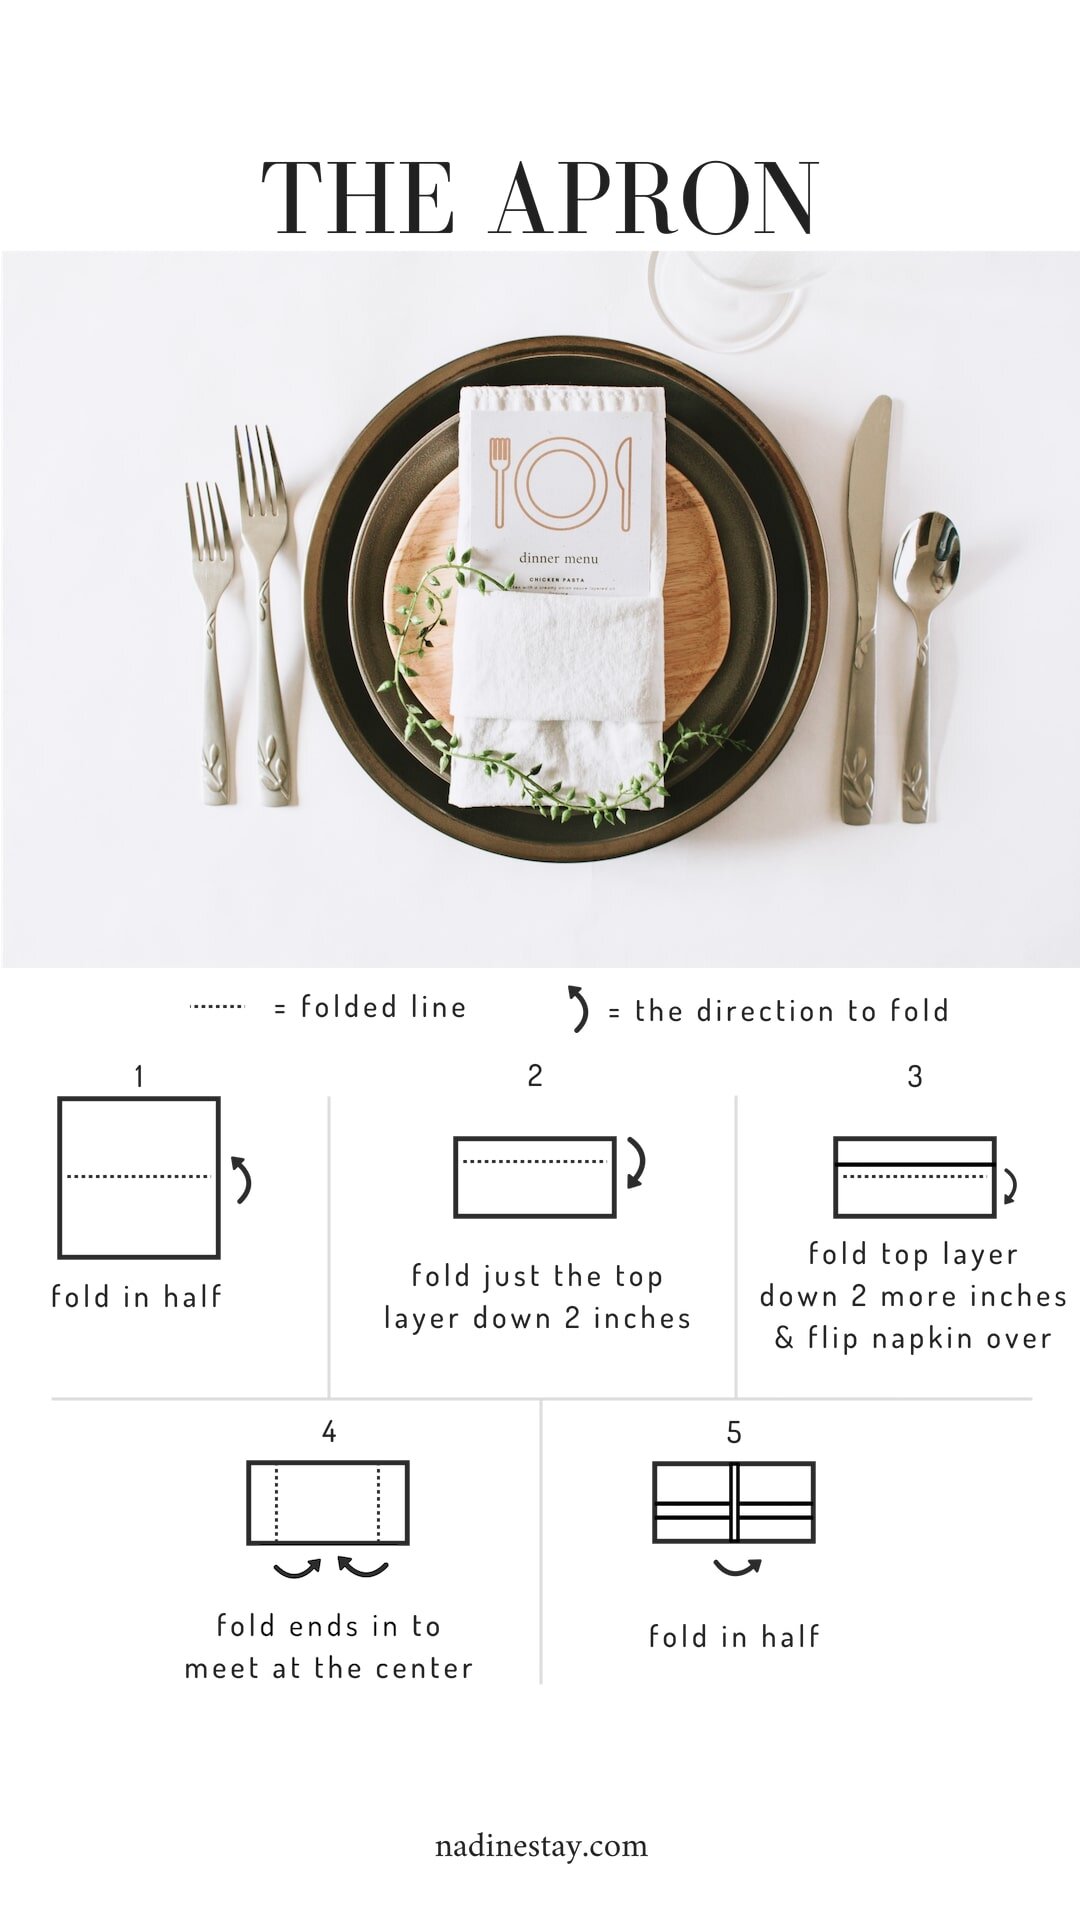 5 easy ways to fold a cloth napkin - place setting inspiration for weddings, birthdays, holidays, and events. Tablescape and table setting inspiration - The apron napkin fold